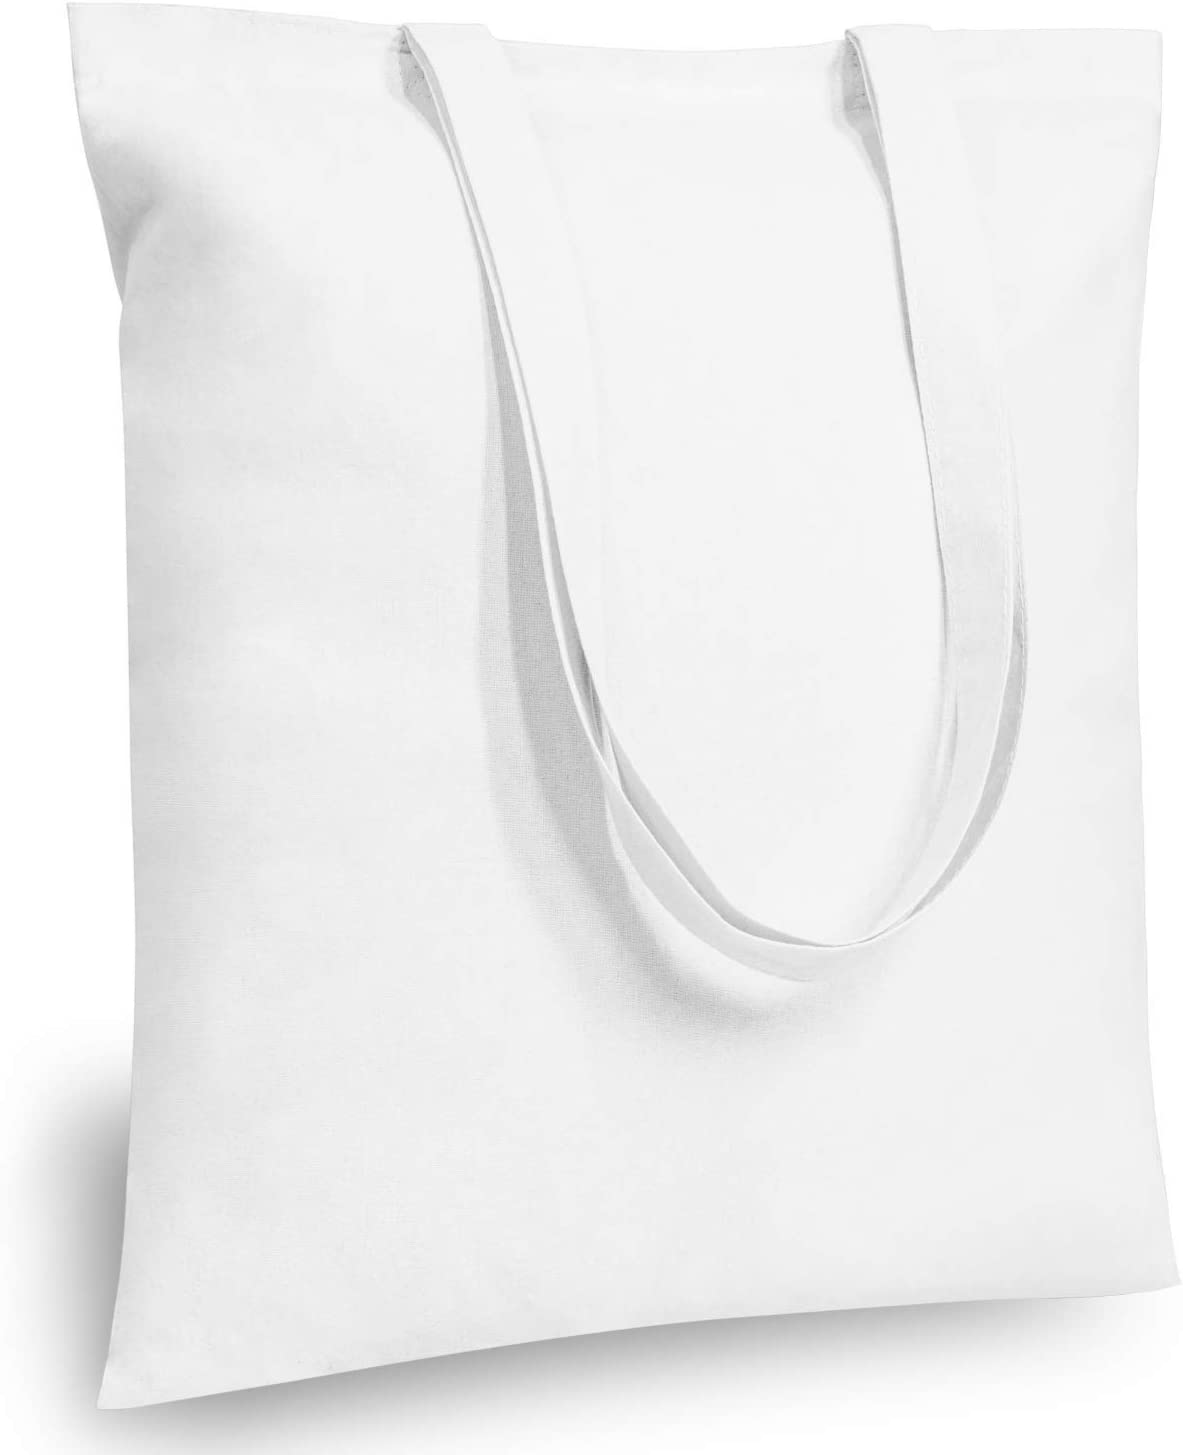 White GAY LUST & LOVE Pride Unisex Cotton Reusable Tote Bag